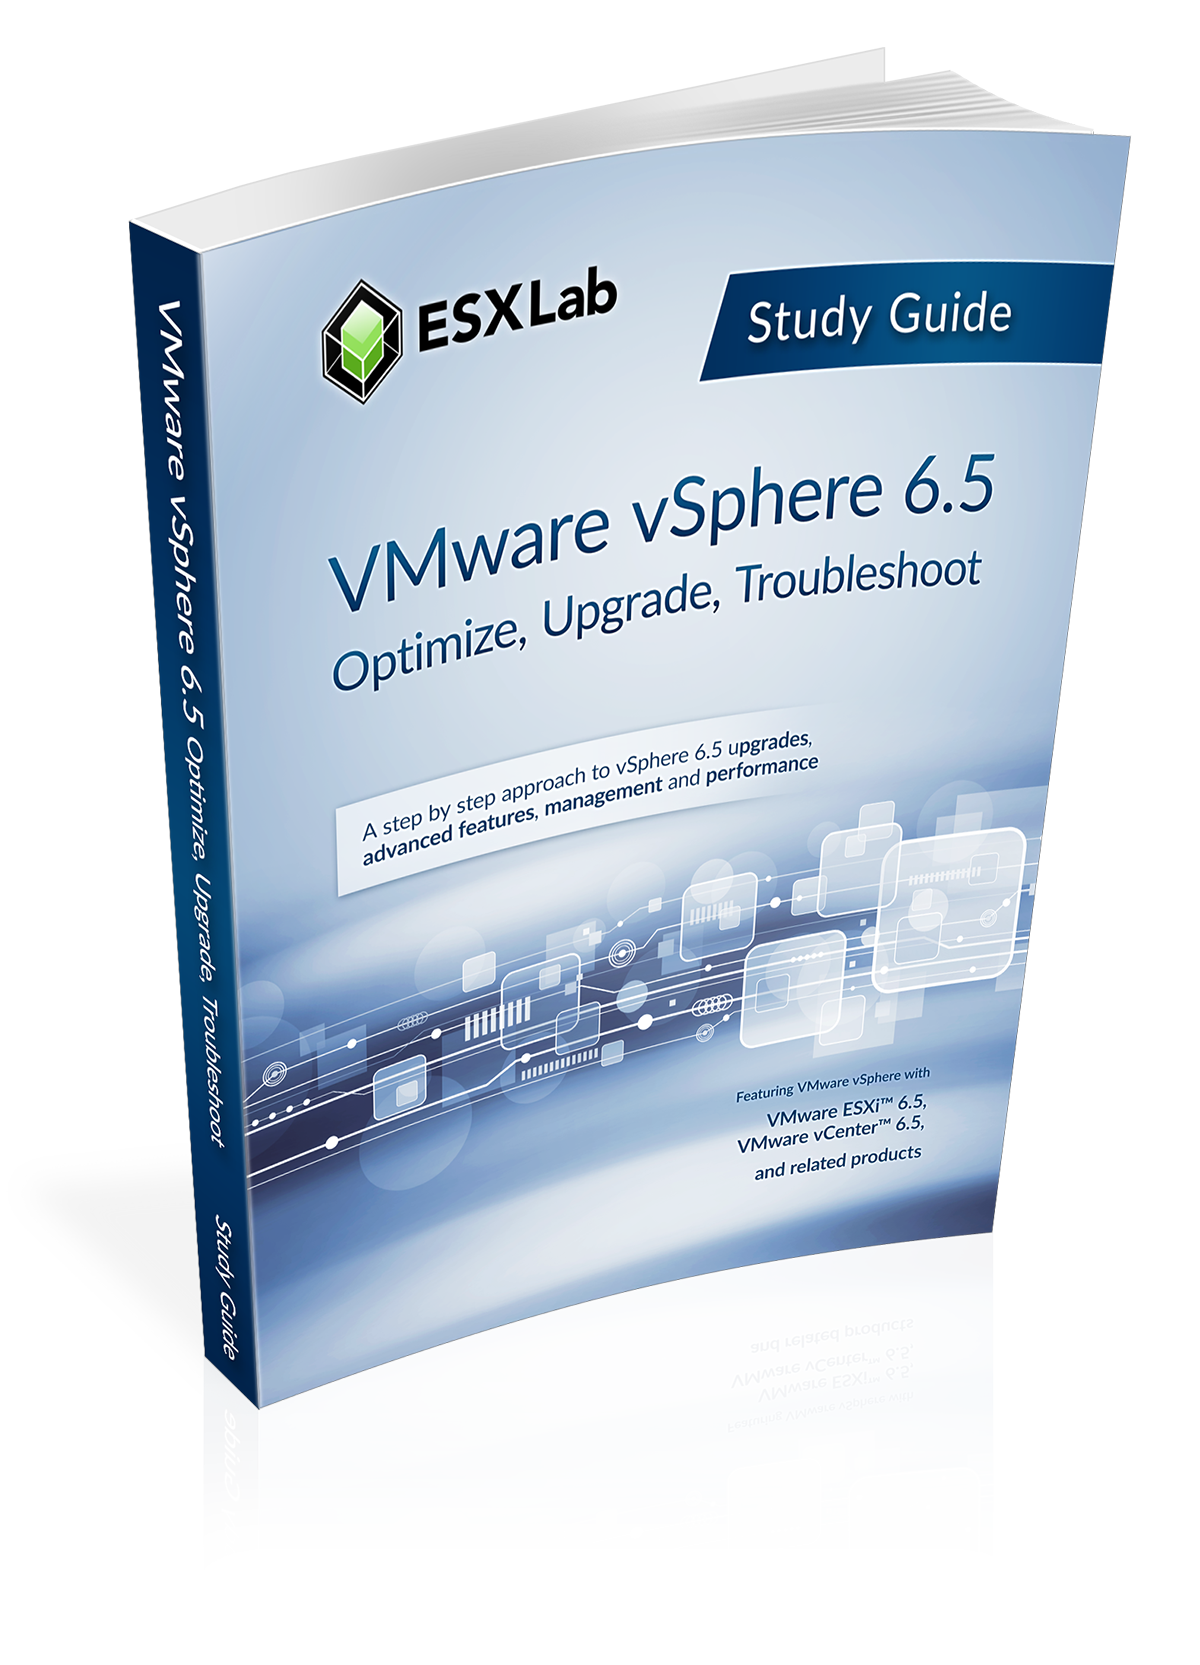 VMware vSphere 6.5 Optimize, Upgrade, Troubleshoot Study Guide